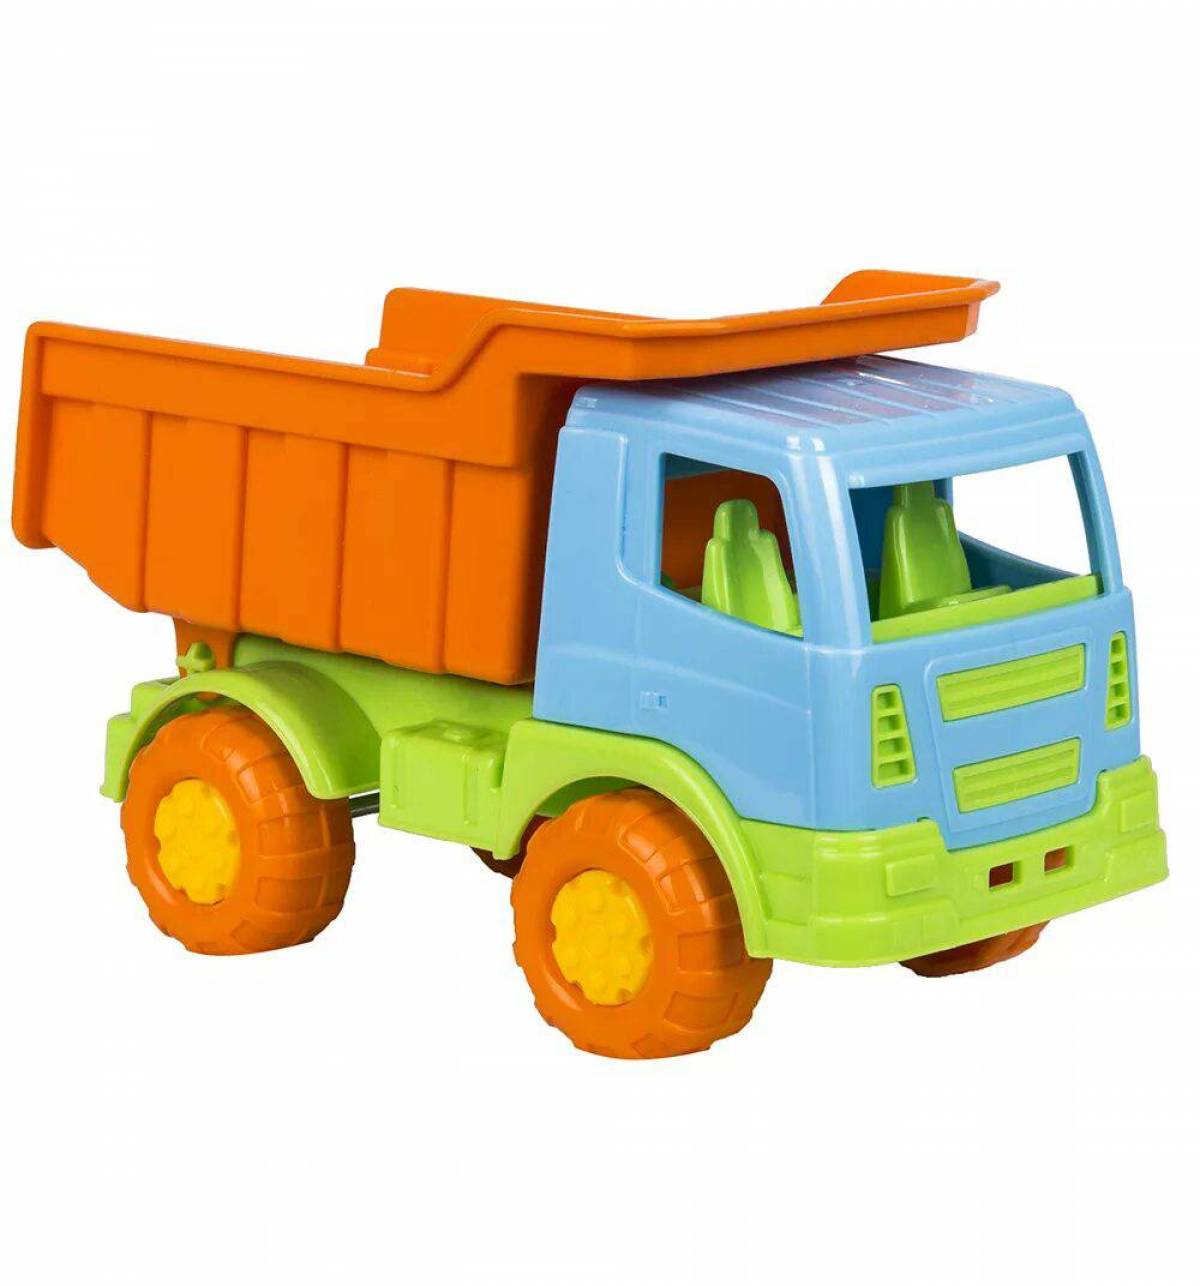 Детские грузовички. Самосвал Orion Toys х1, 20 см. Автомобиль-самосвал 45929s. Грузовые машины для детей. Машина самосвал игрушка.